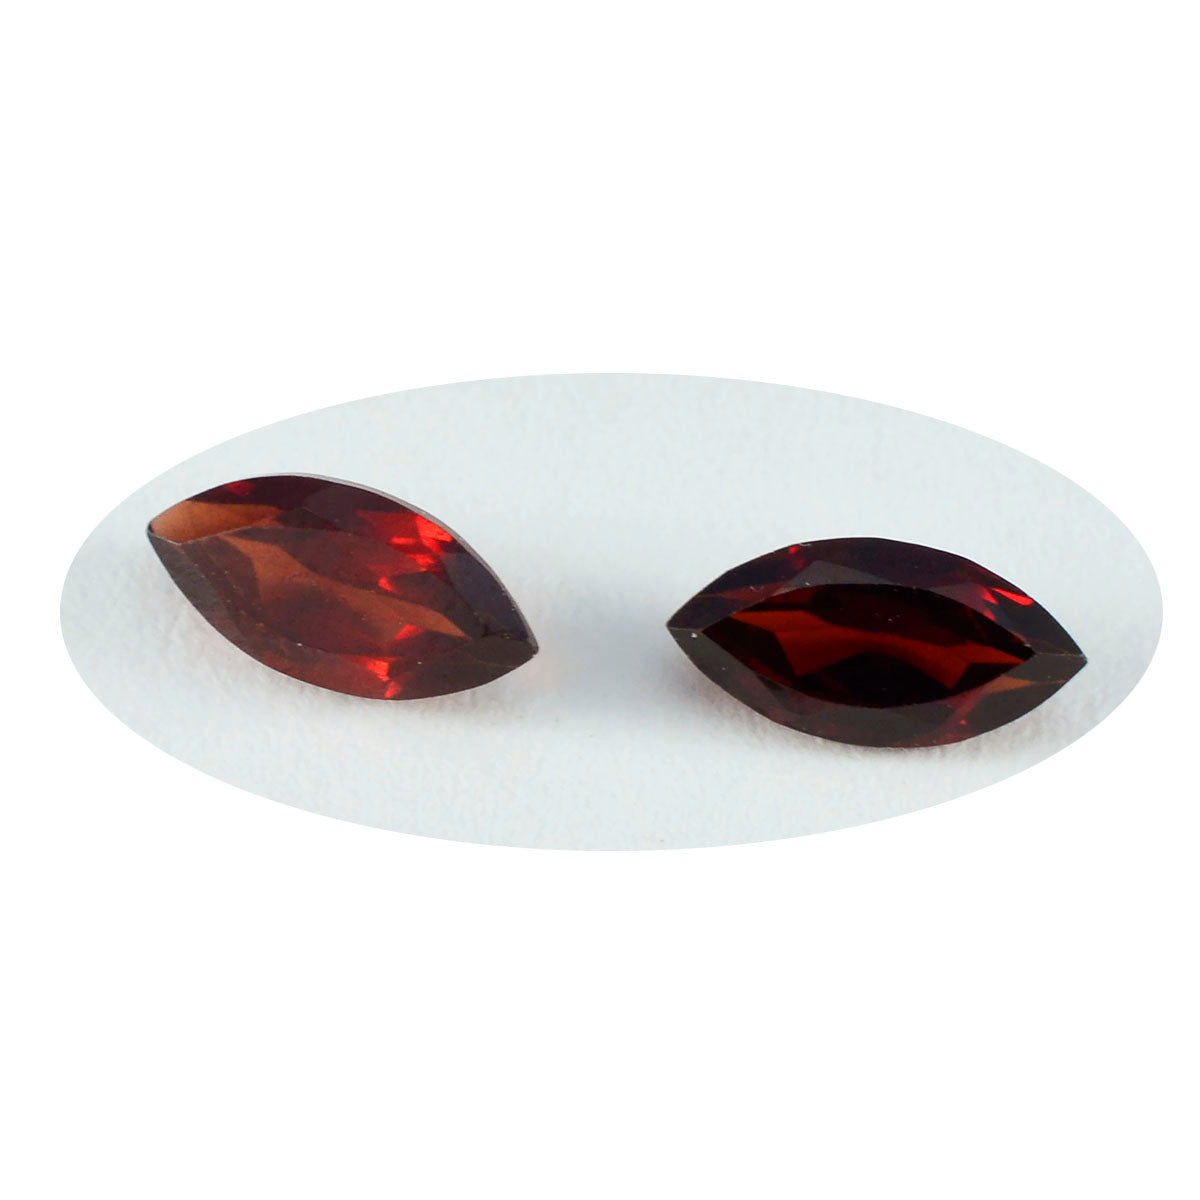 Riyogems 1PC Genuine Red Garnet Faceted 7x14 mm Marquise Shape amazing Quality Stone